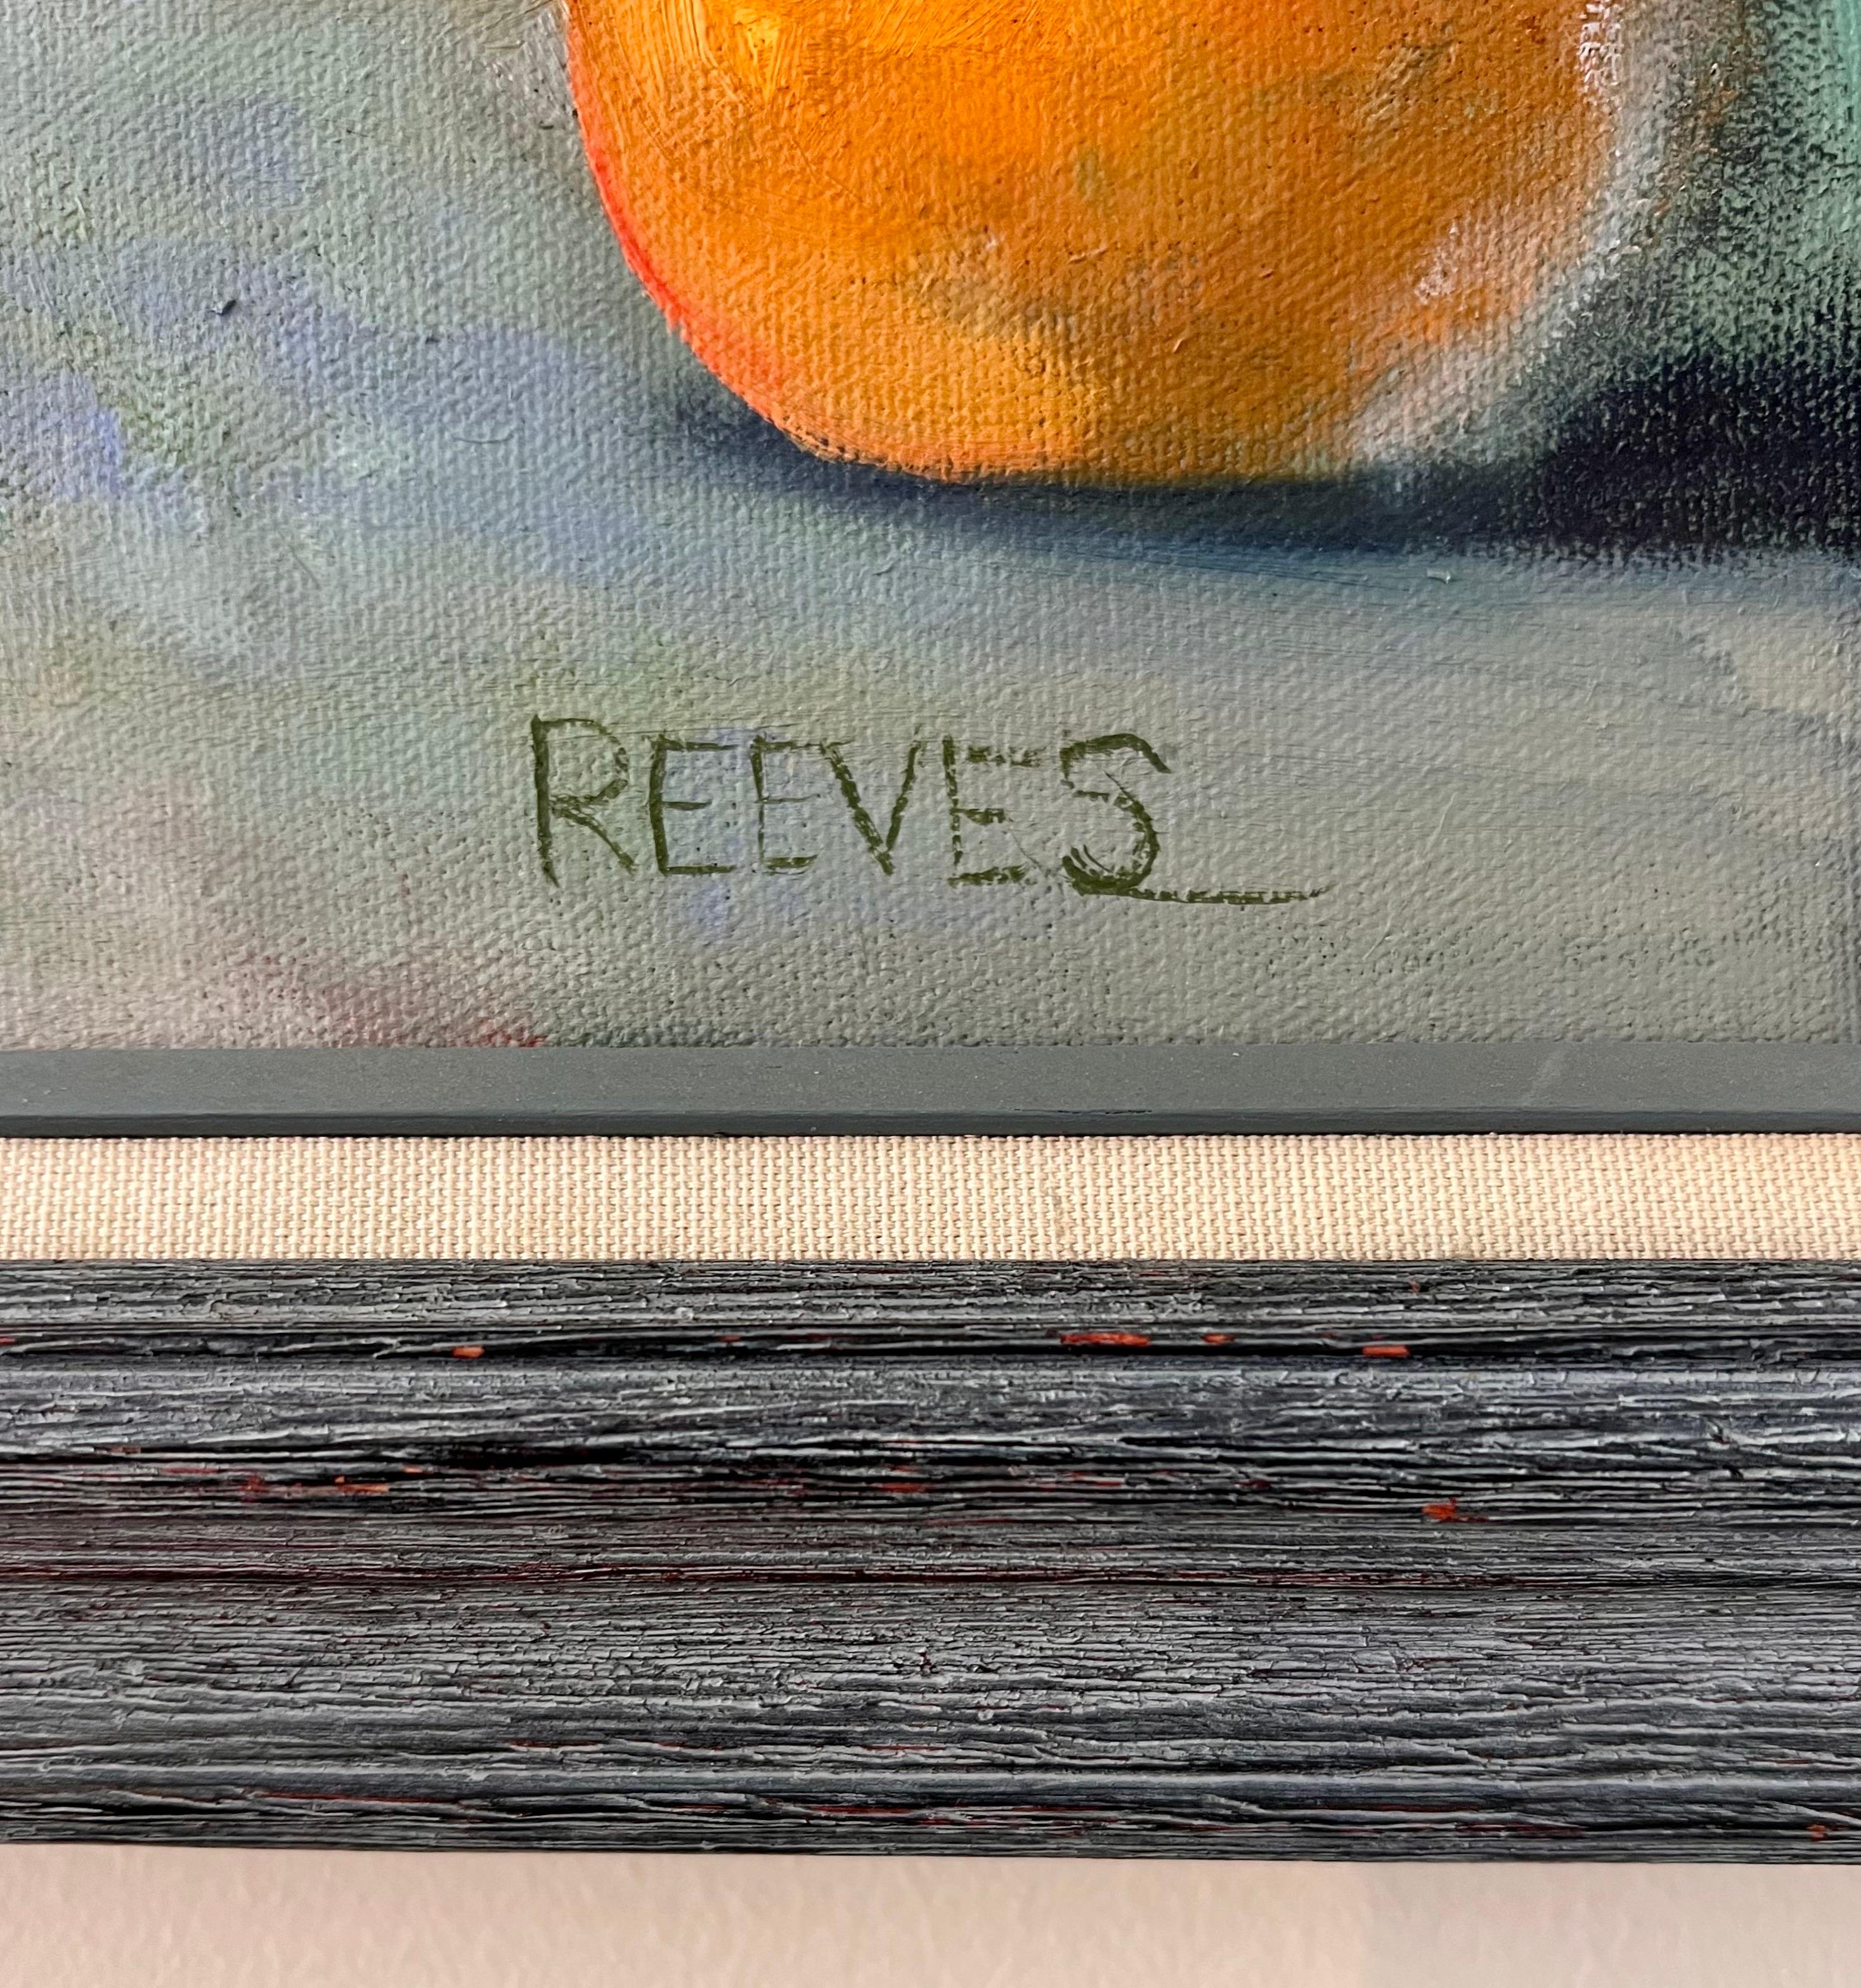 Américain Peinture de nature morte originale signée Carol Reeves - Oranges & Flowers en vente